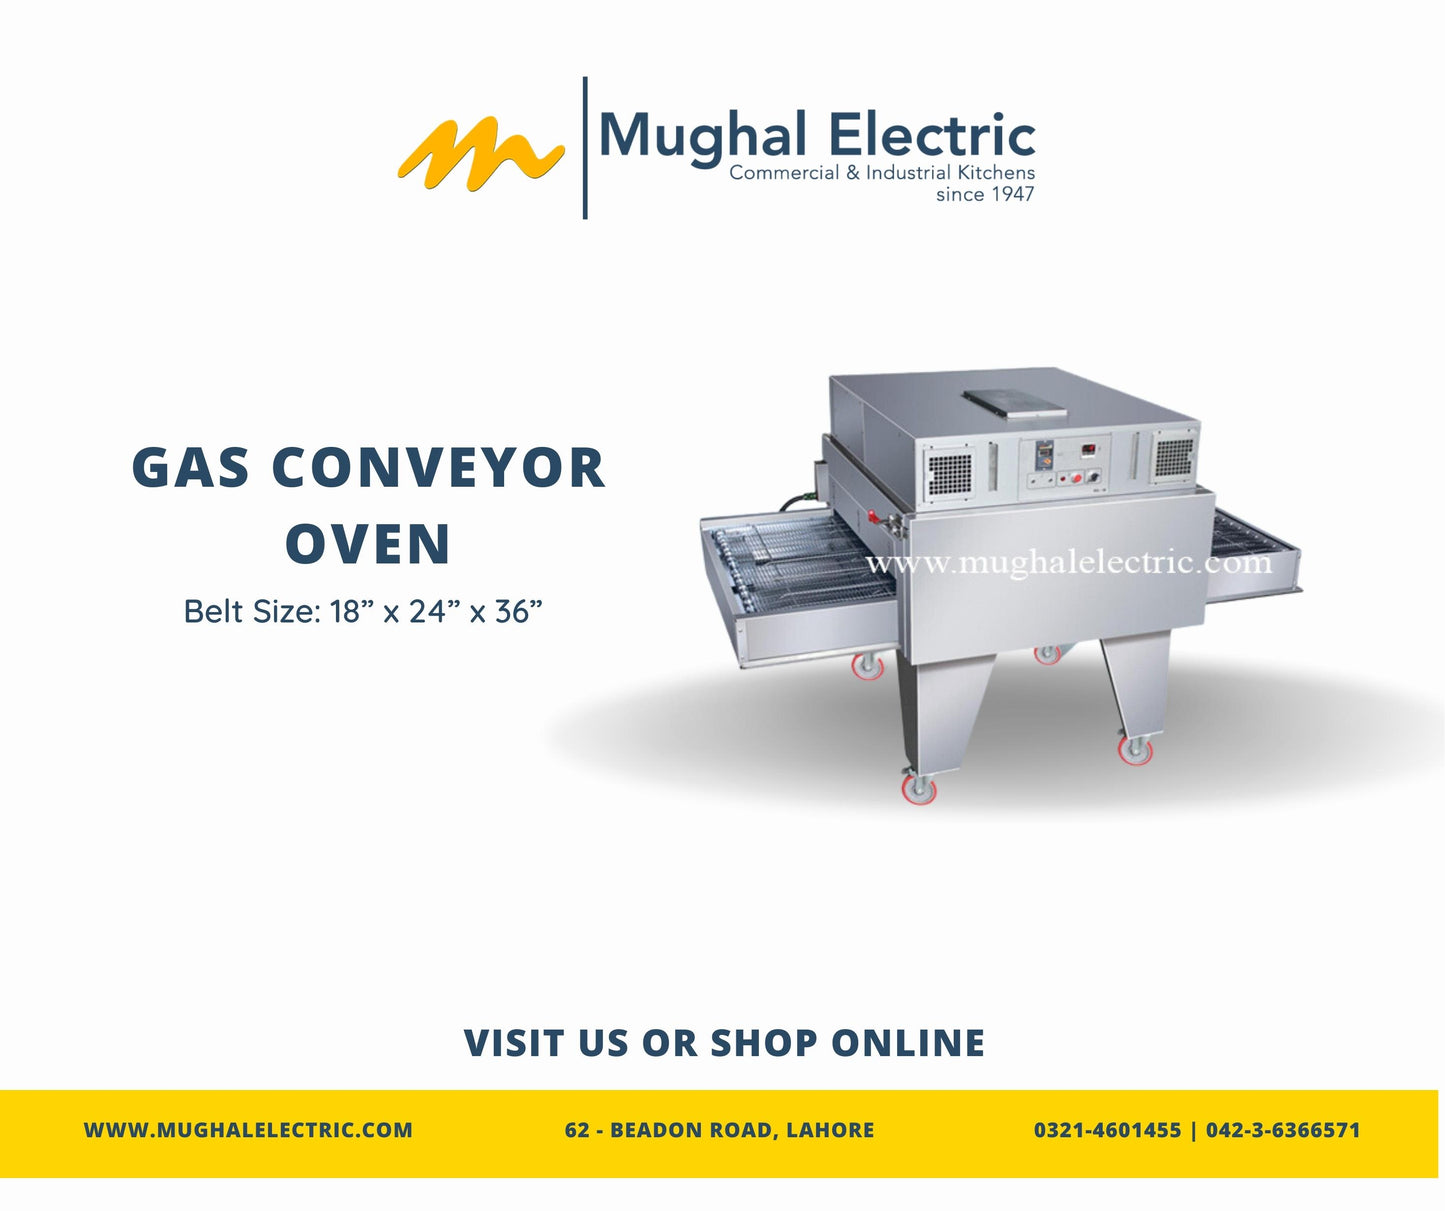 Gas Conveyor Oven RKL-36